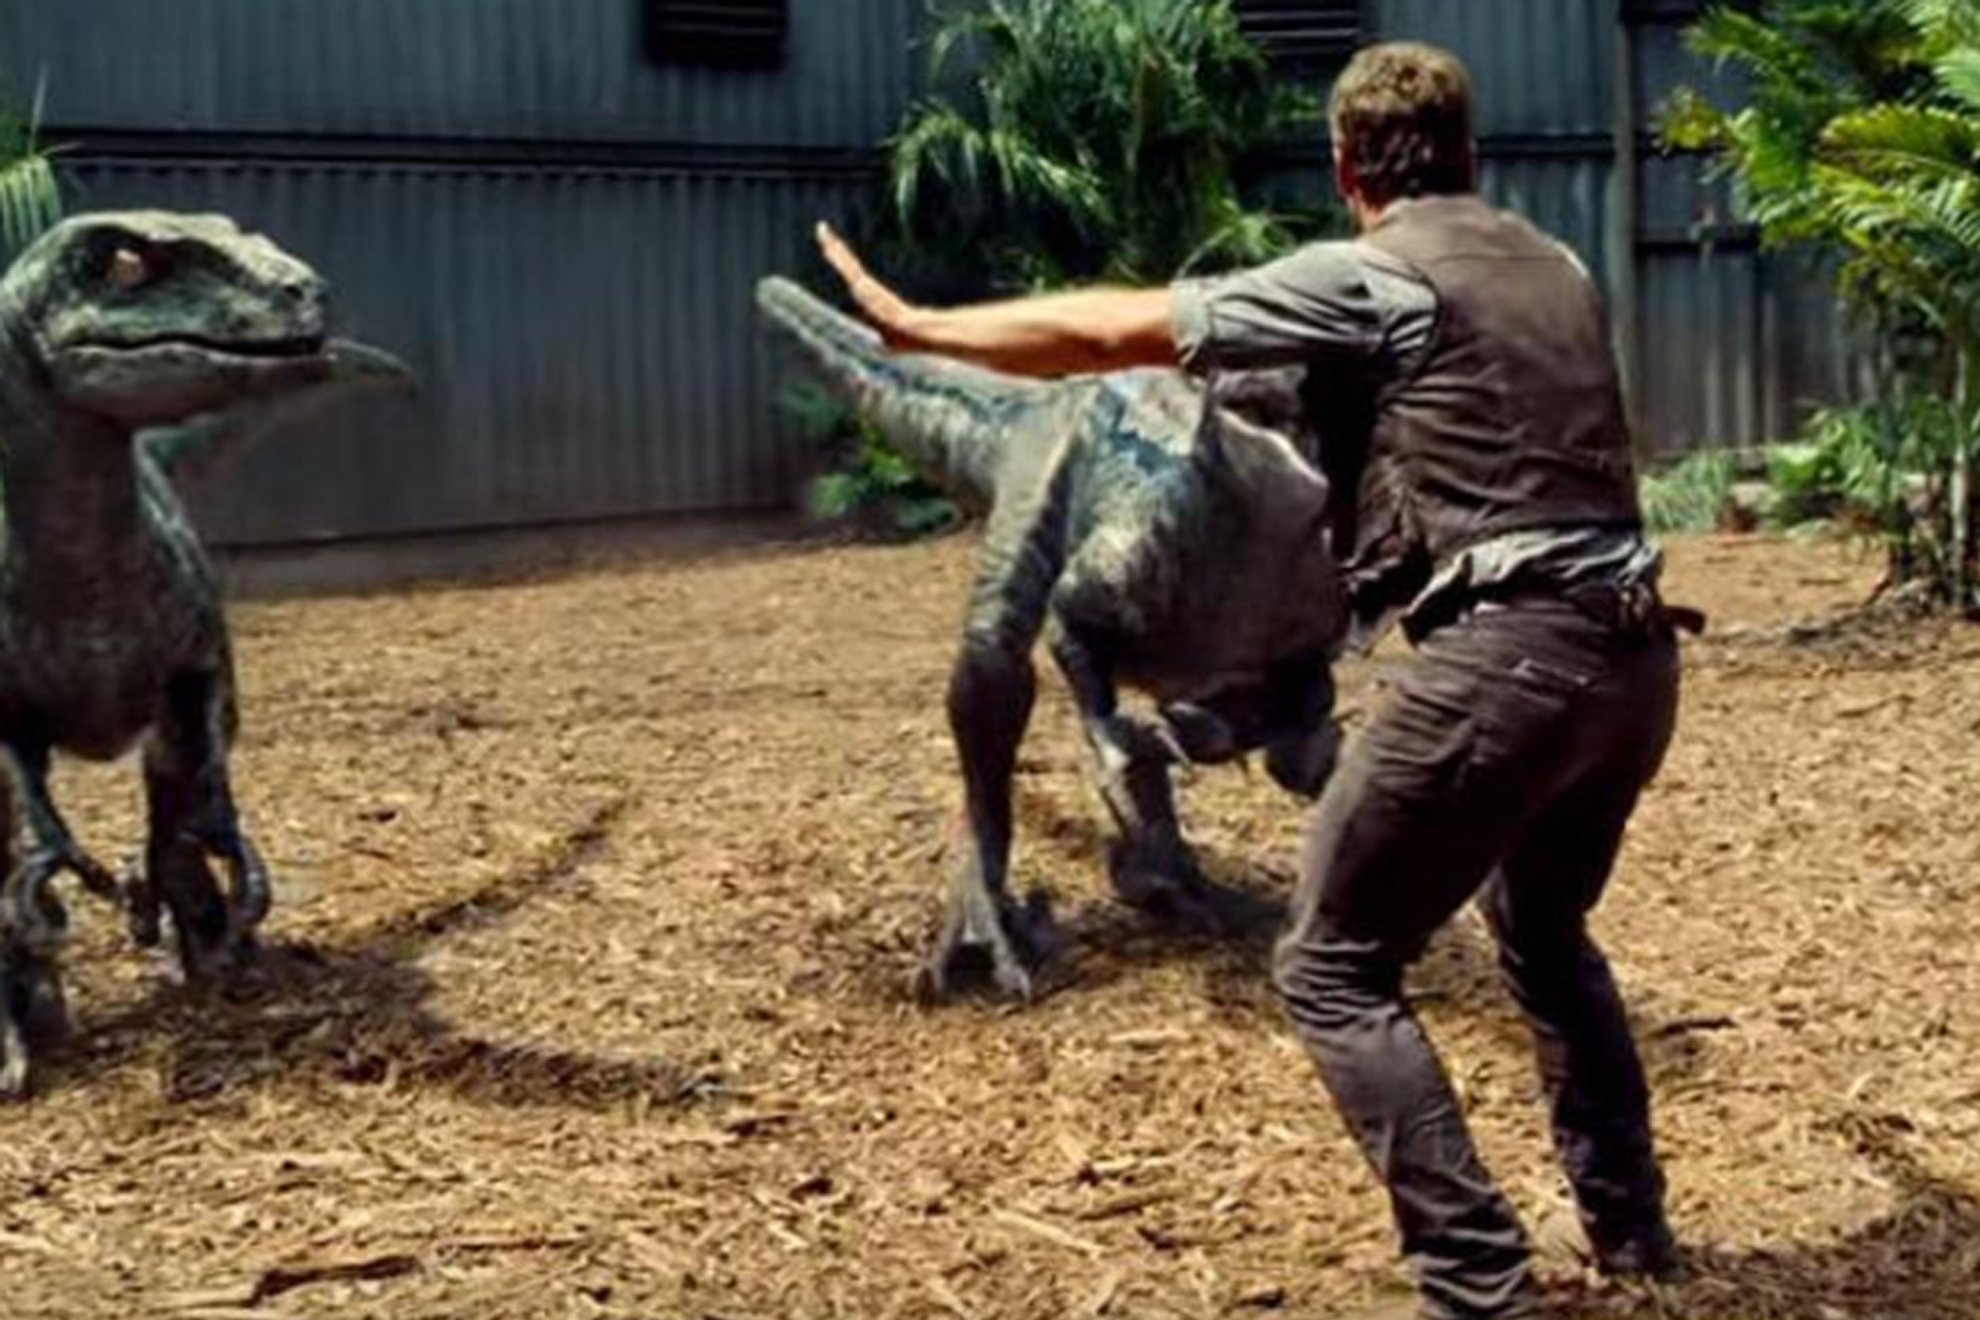 Una directora candidata al Oscar ha propuesto una versin ertica de Jurassic Park: Sera un drama domstico